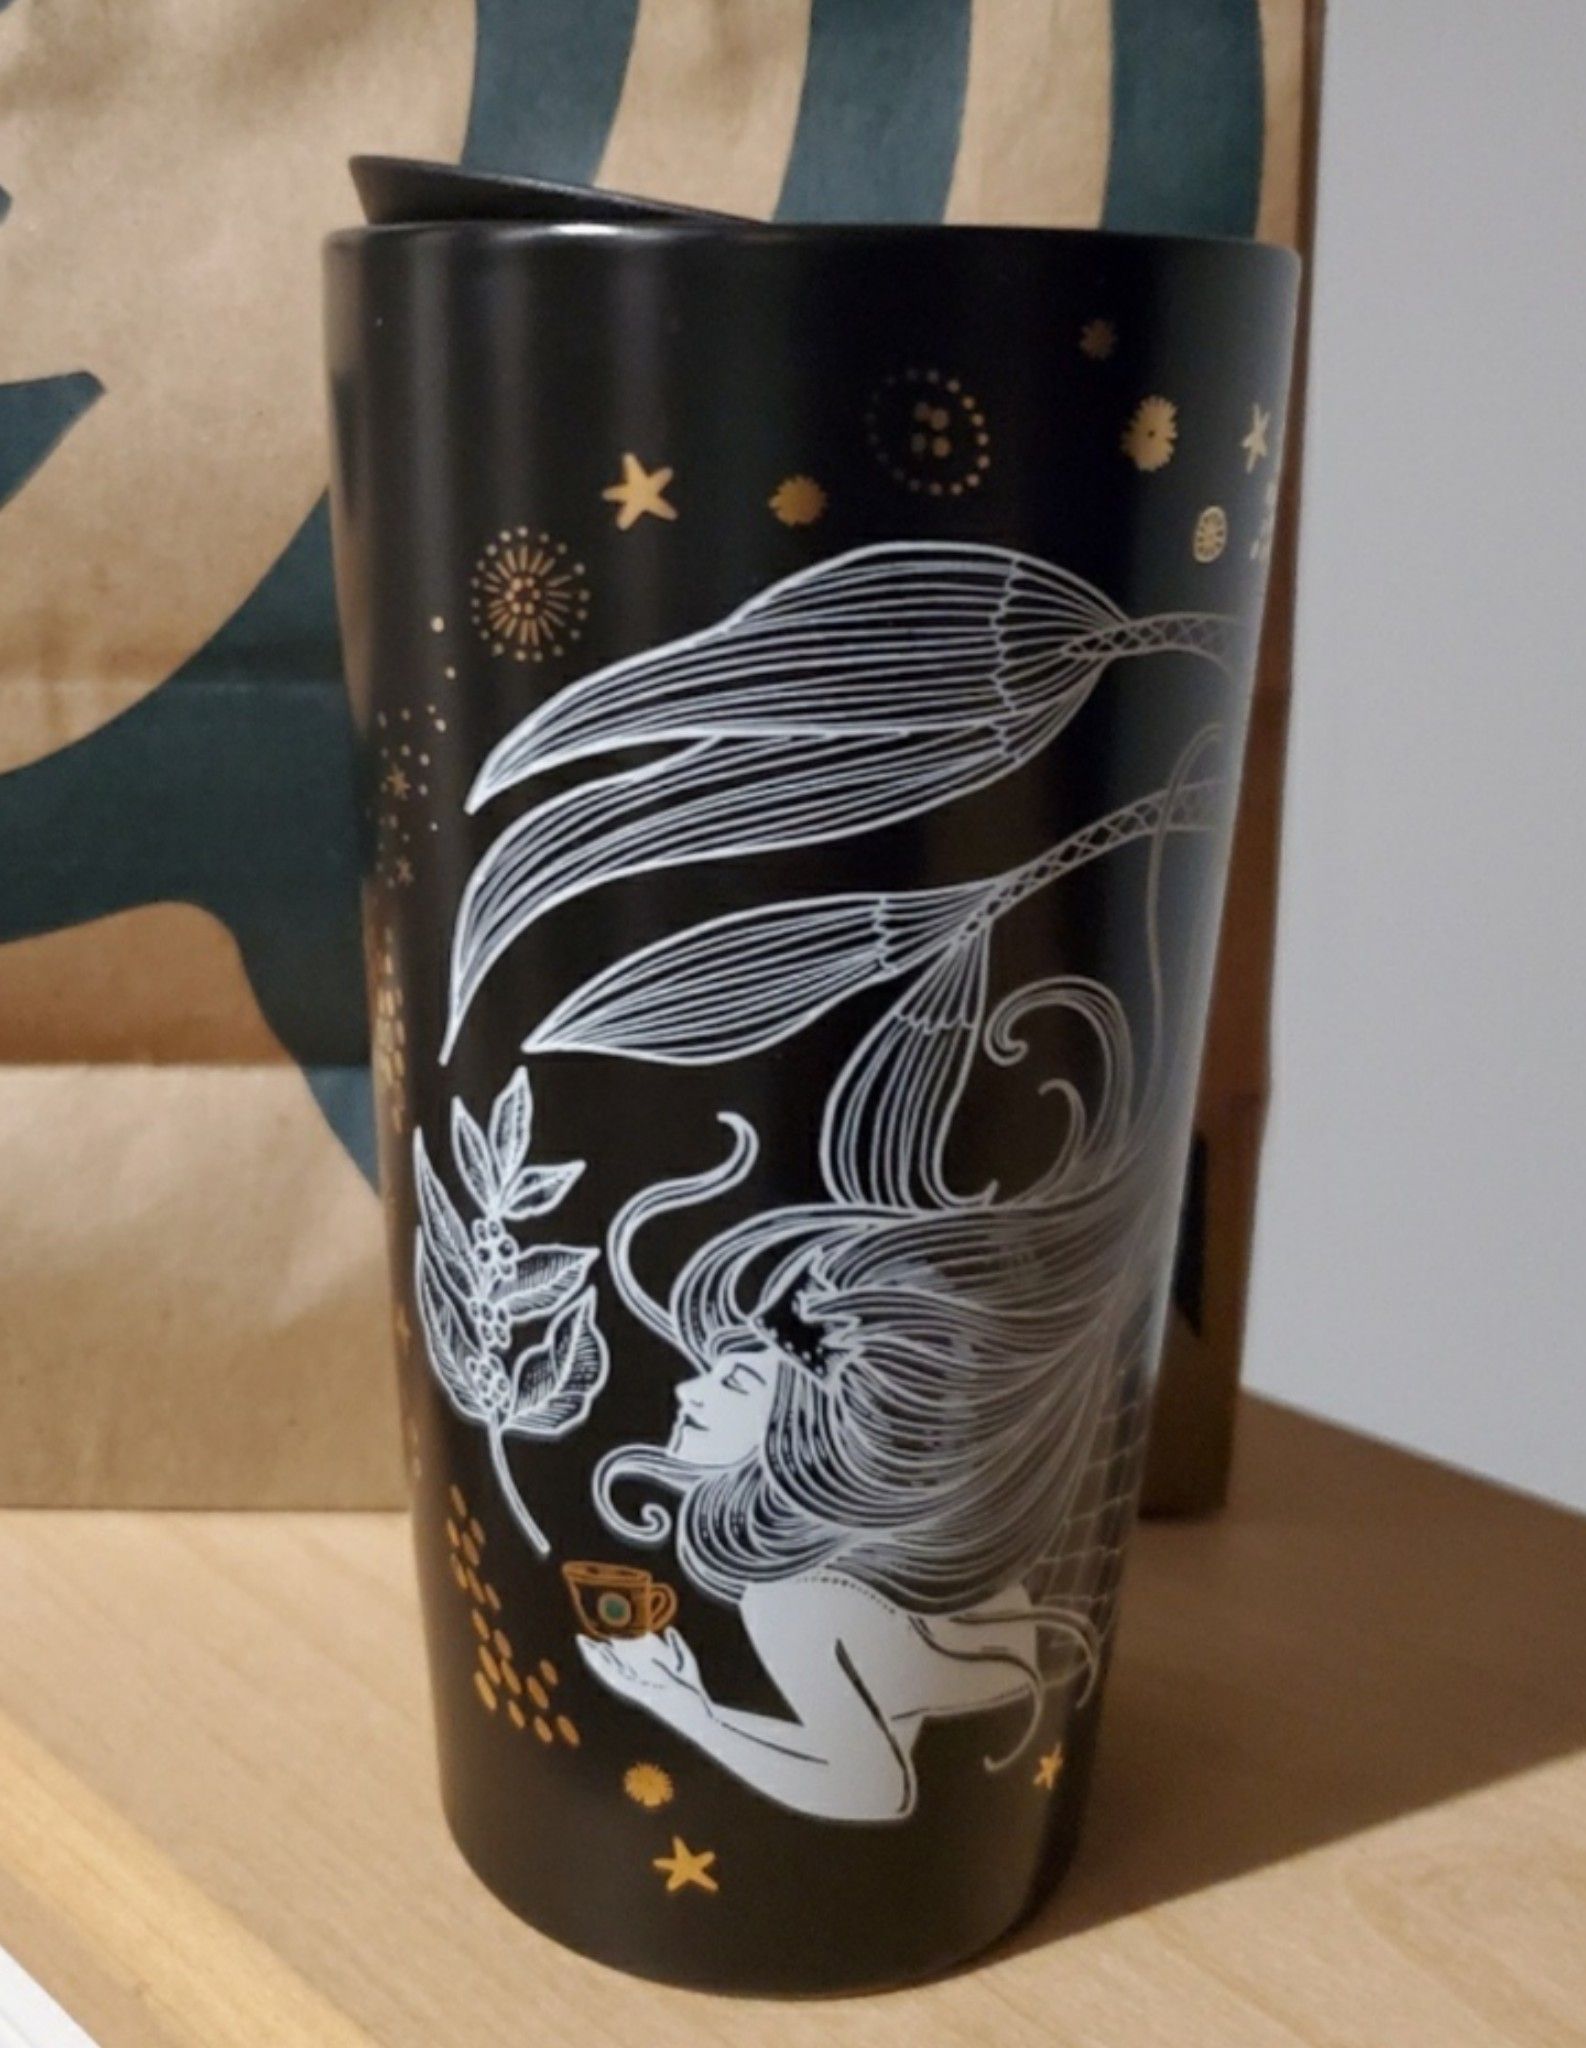 New Starbucks mermaid travel mug